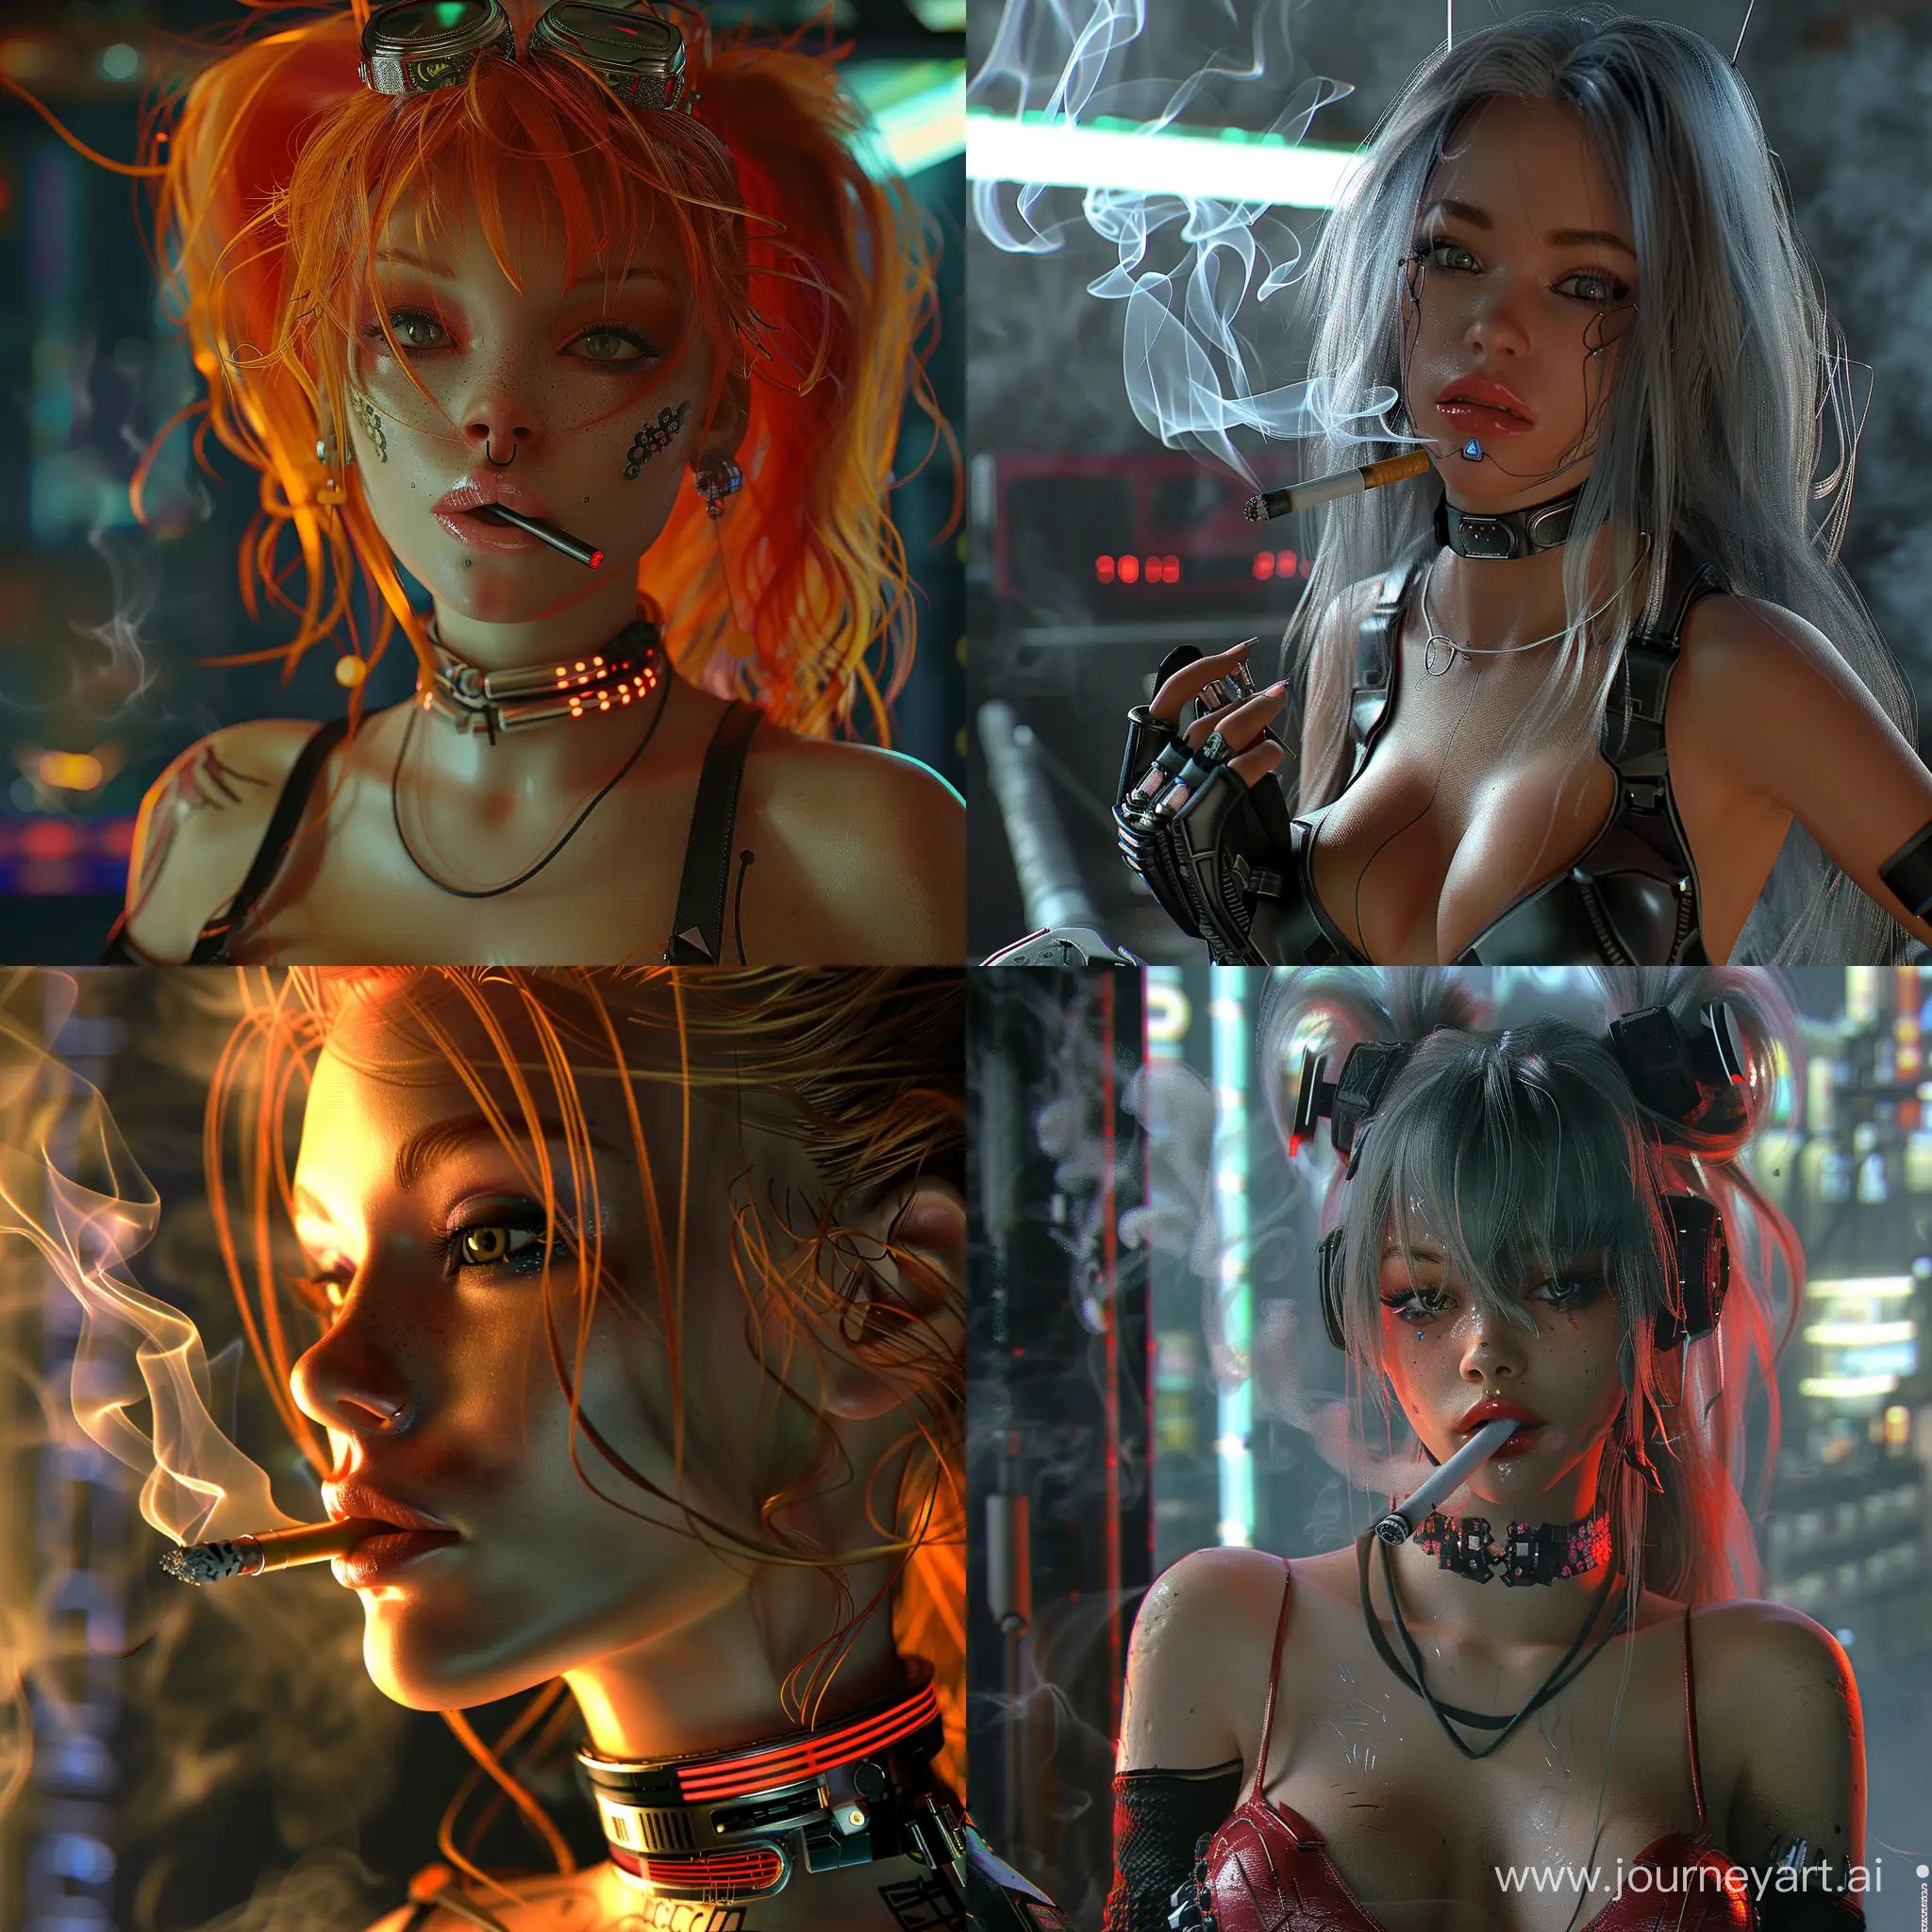 Futuristic-Cyberpunk-Woman-Smoking-in-3D-Art